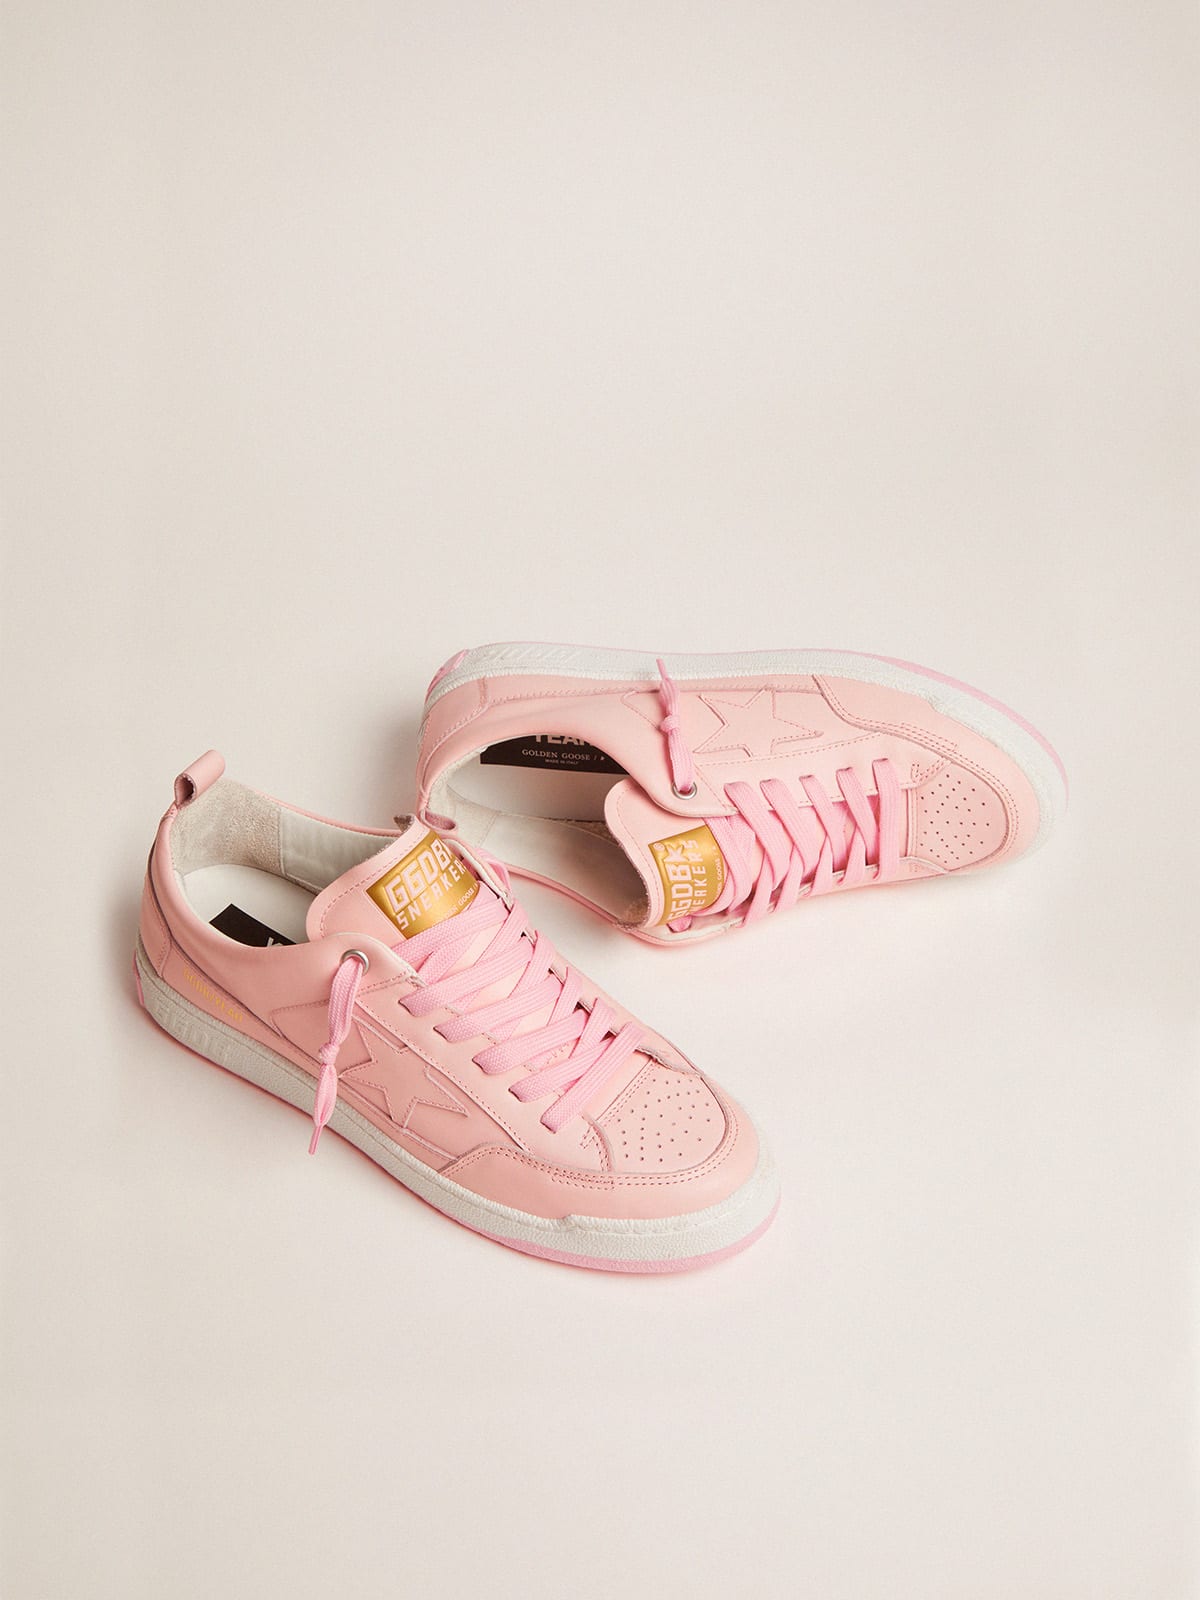 Golden Goose - Men’s Yeah sneakers in pale pink leather in 